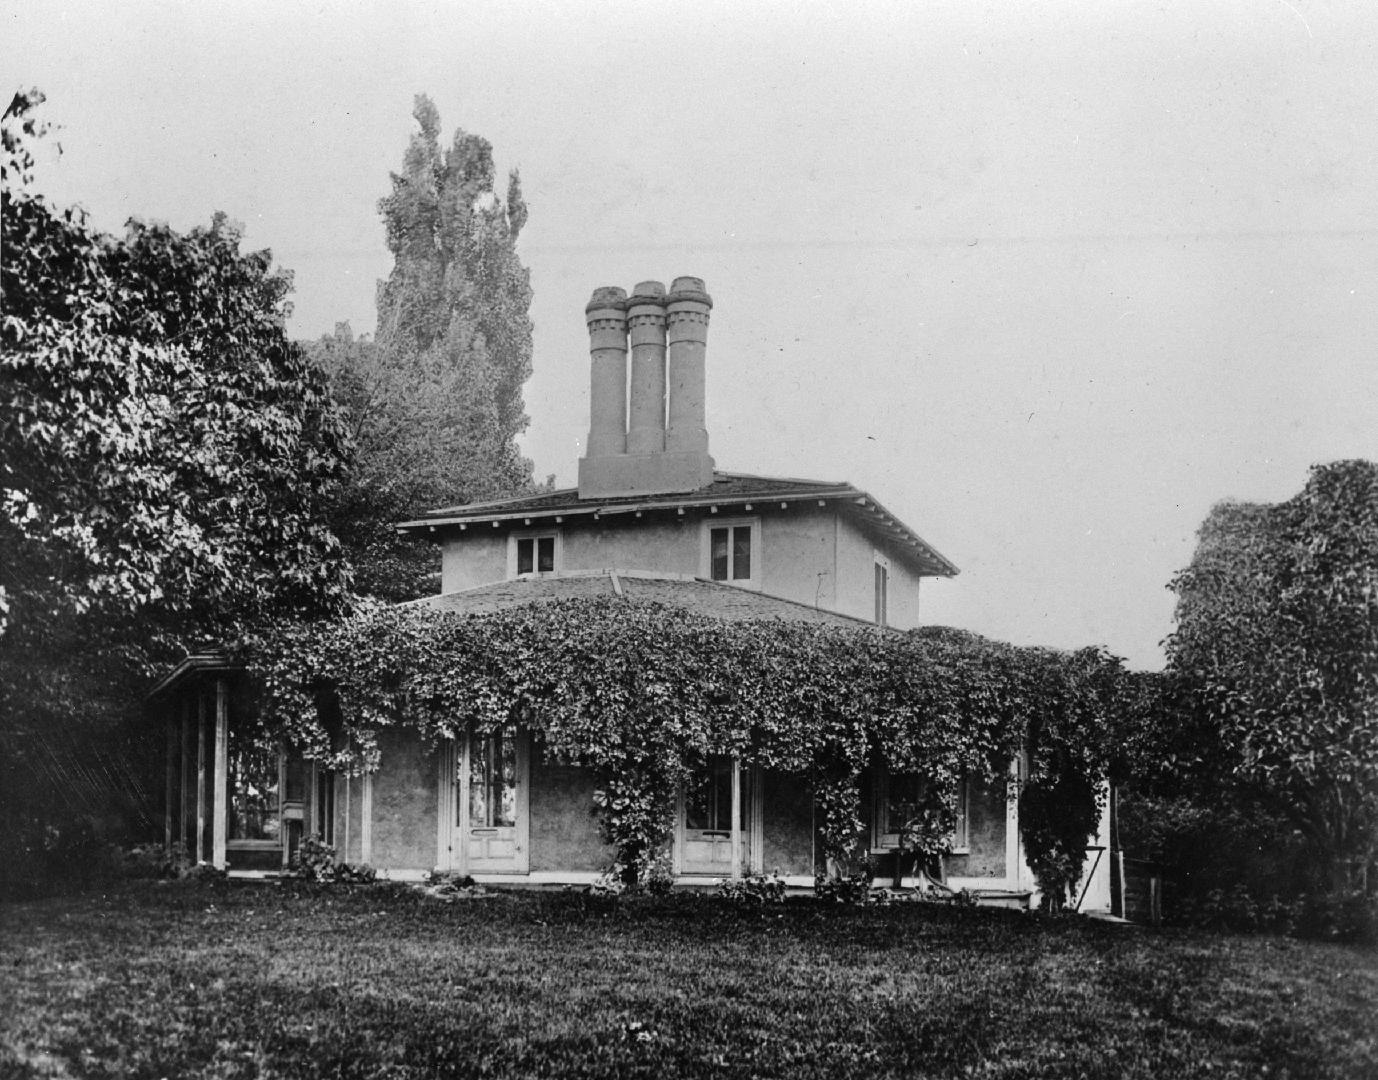 Howard, John George, 'Colborne Lodge', High Park